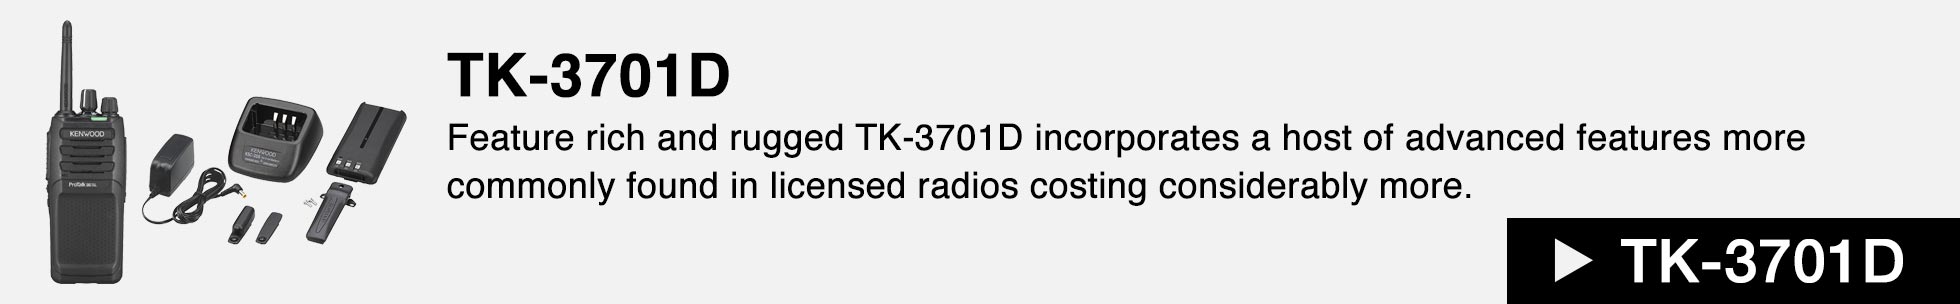 TK-3701D License-free two way radio